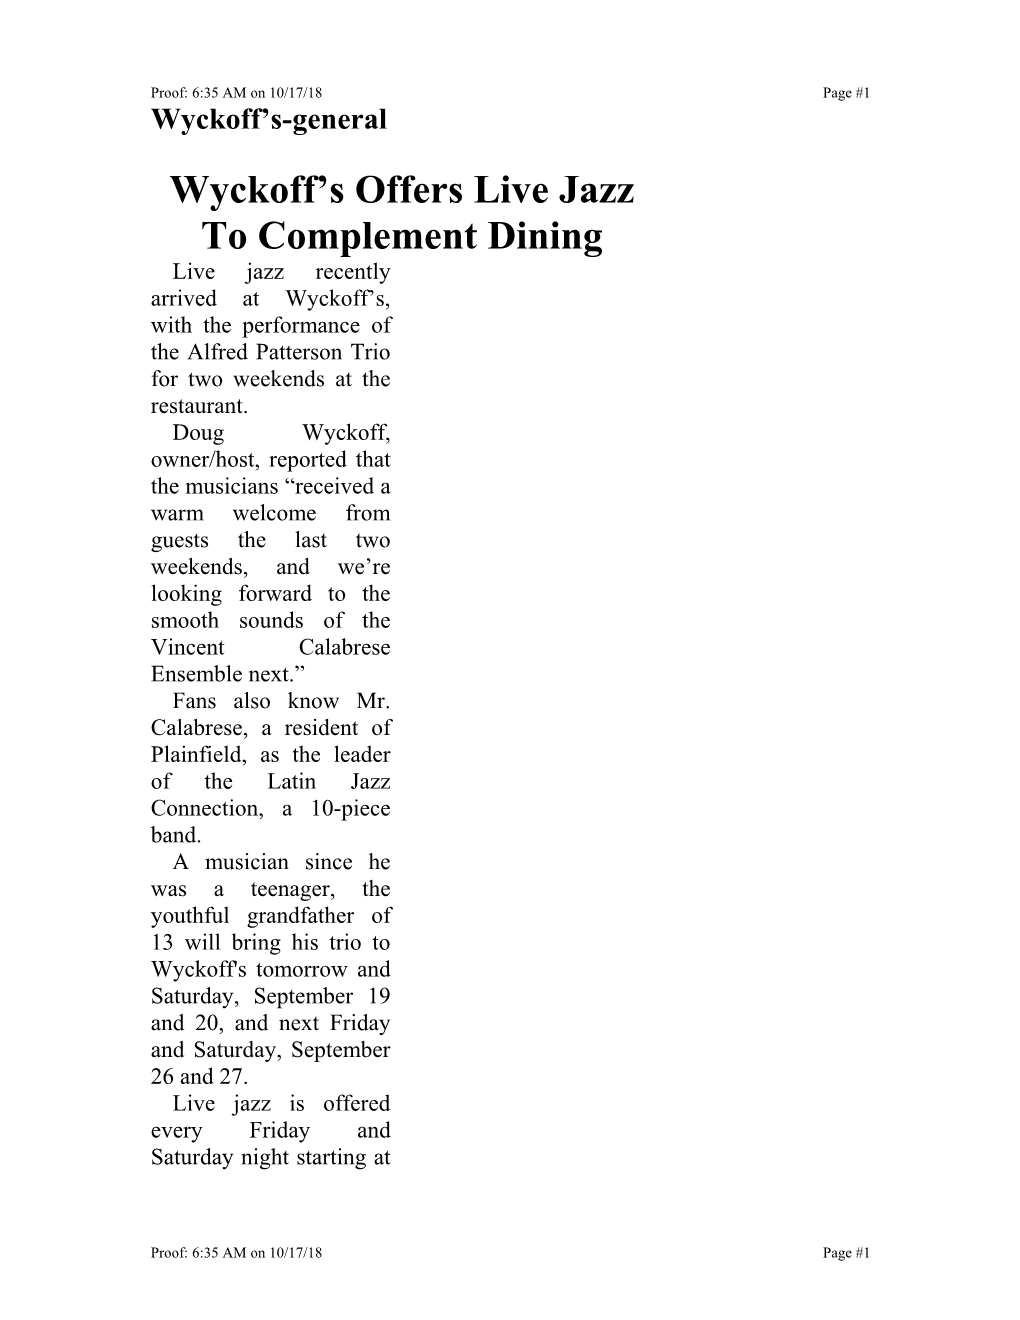 Wyckoff S Offers Live Jazz